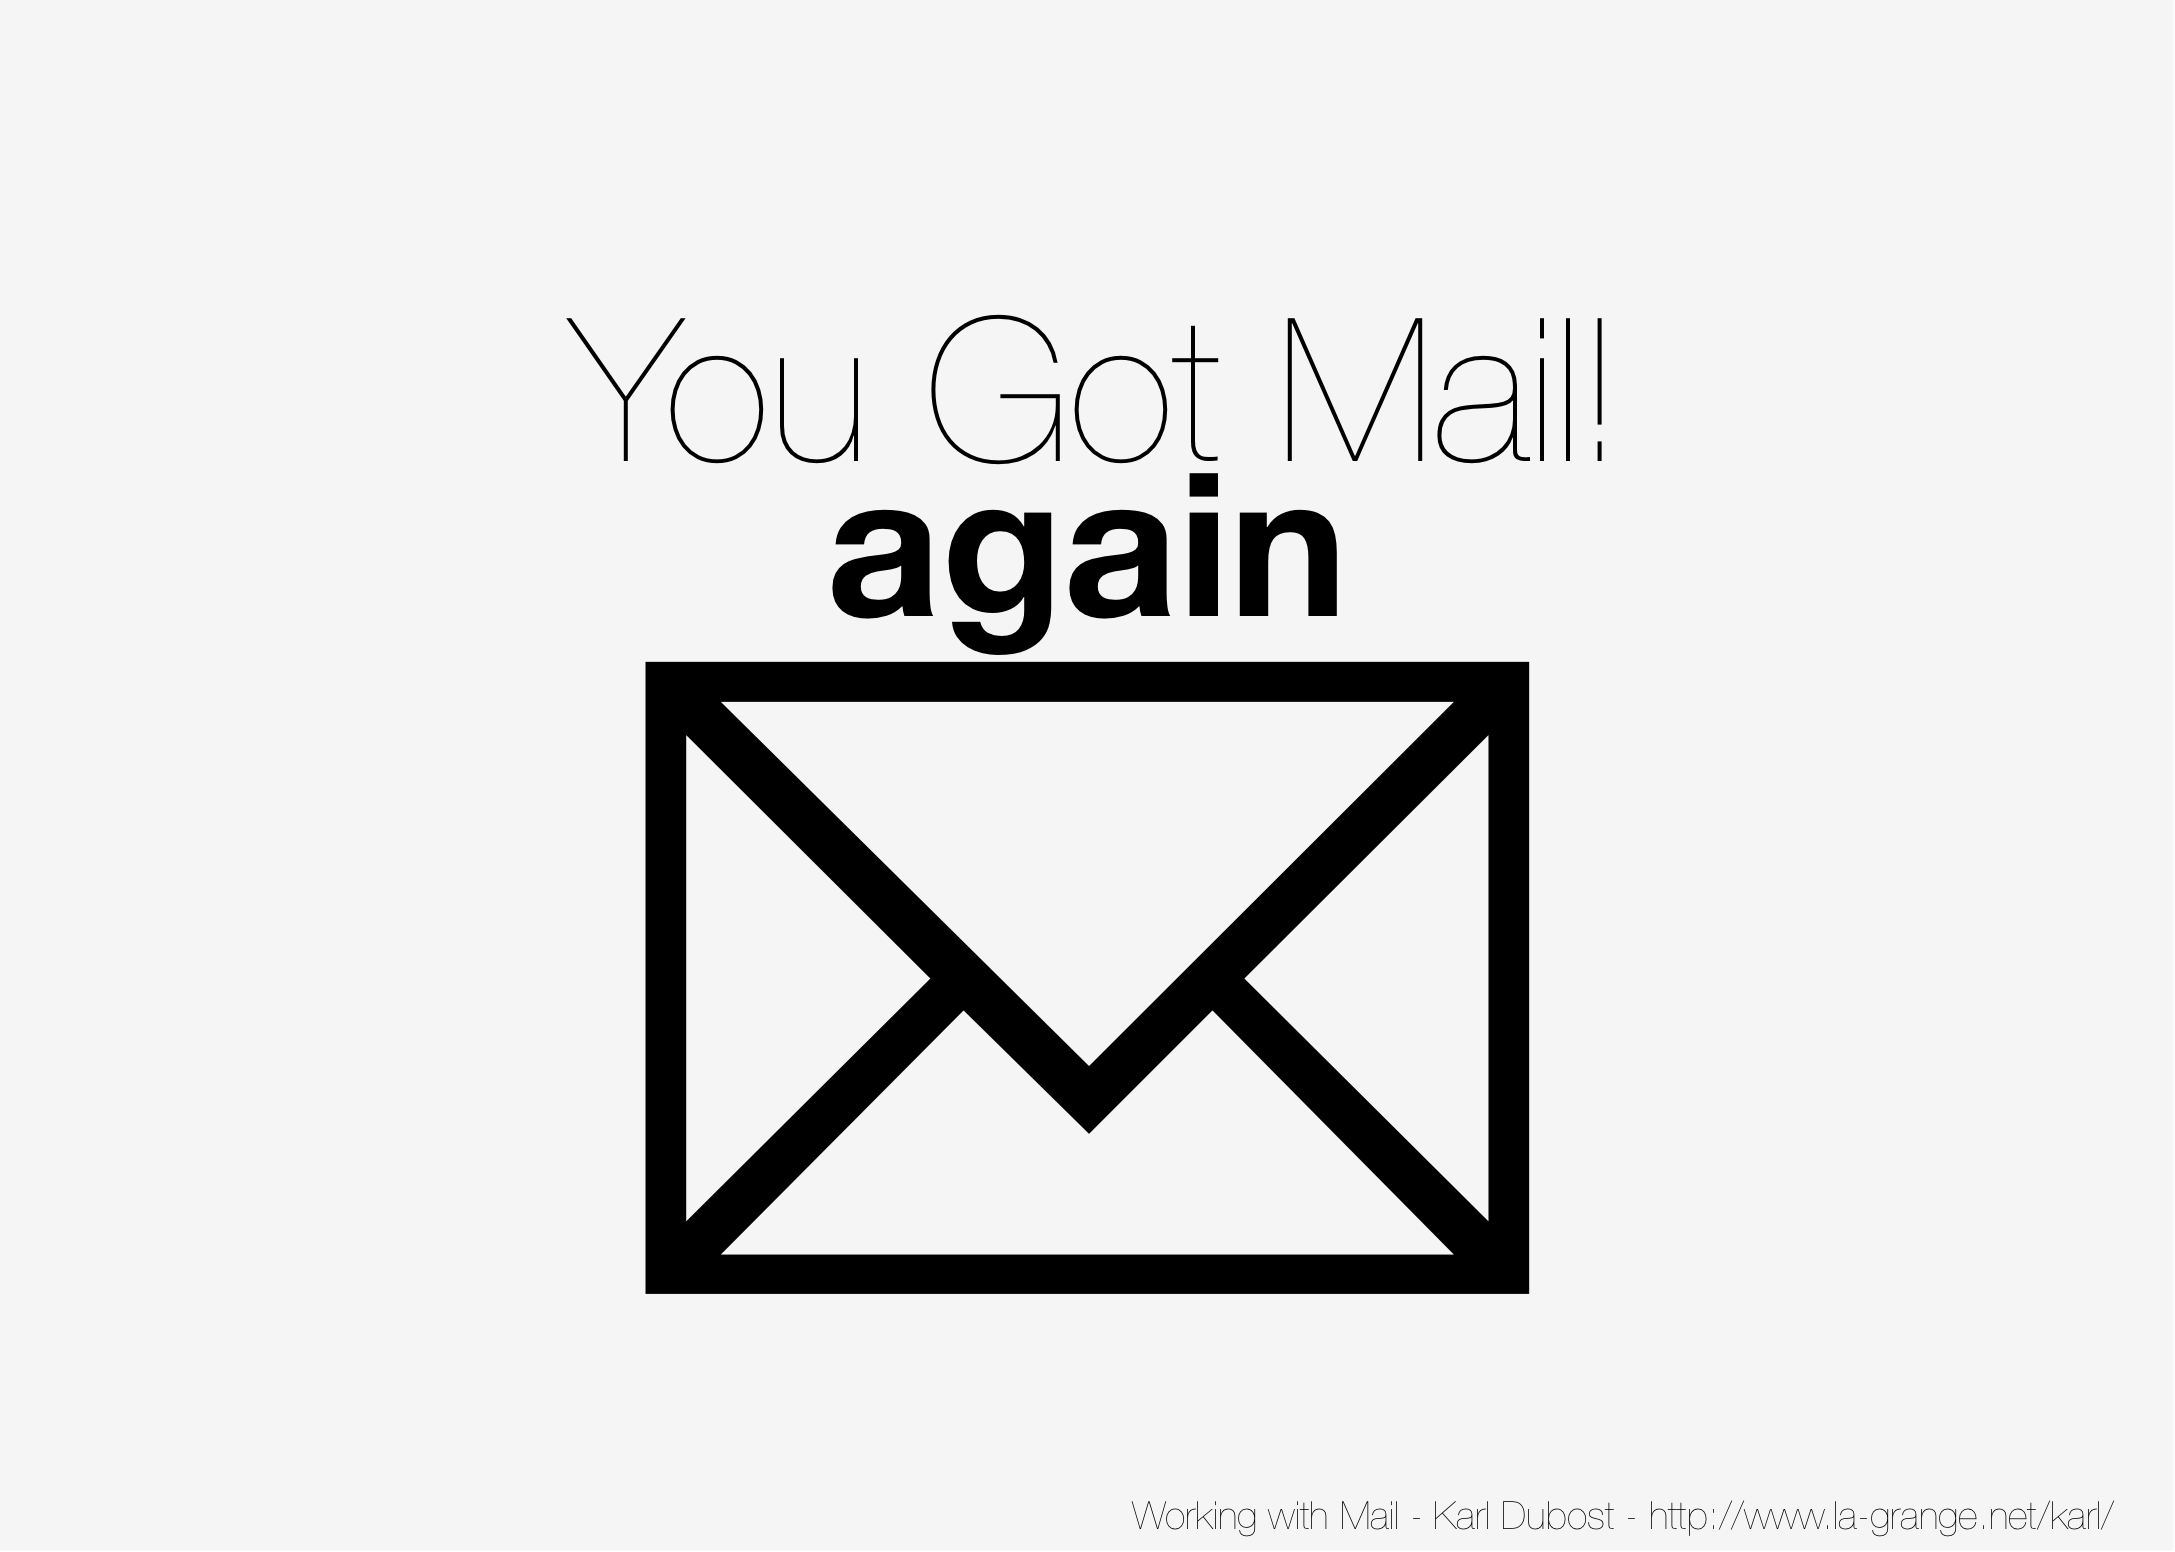 Slide 22 - You got mail again